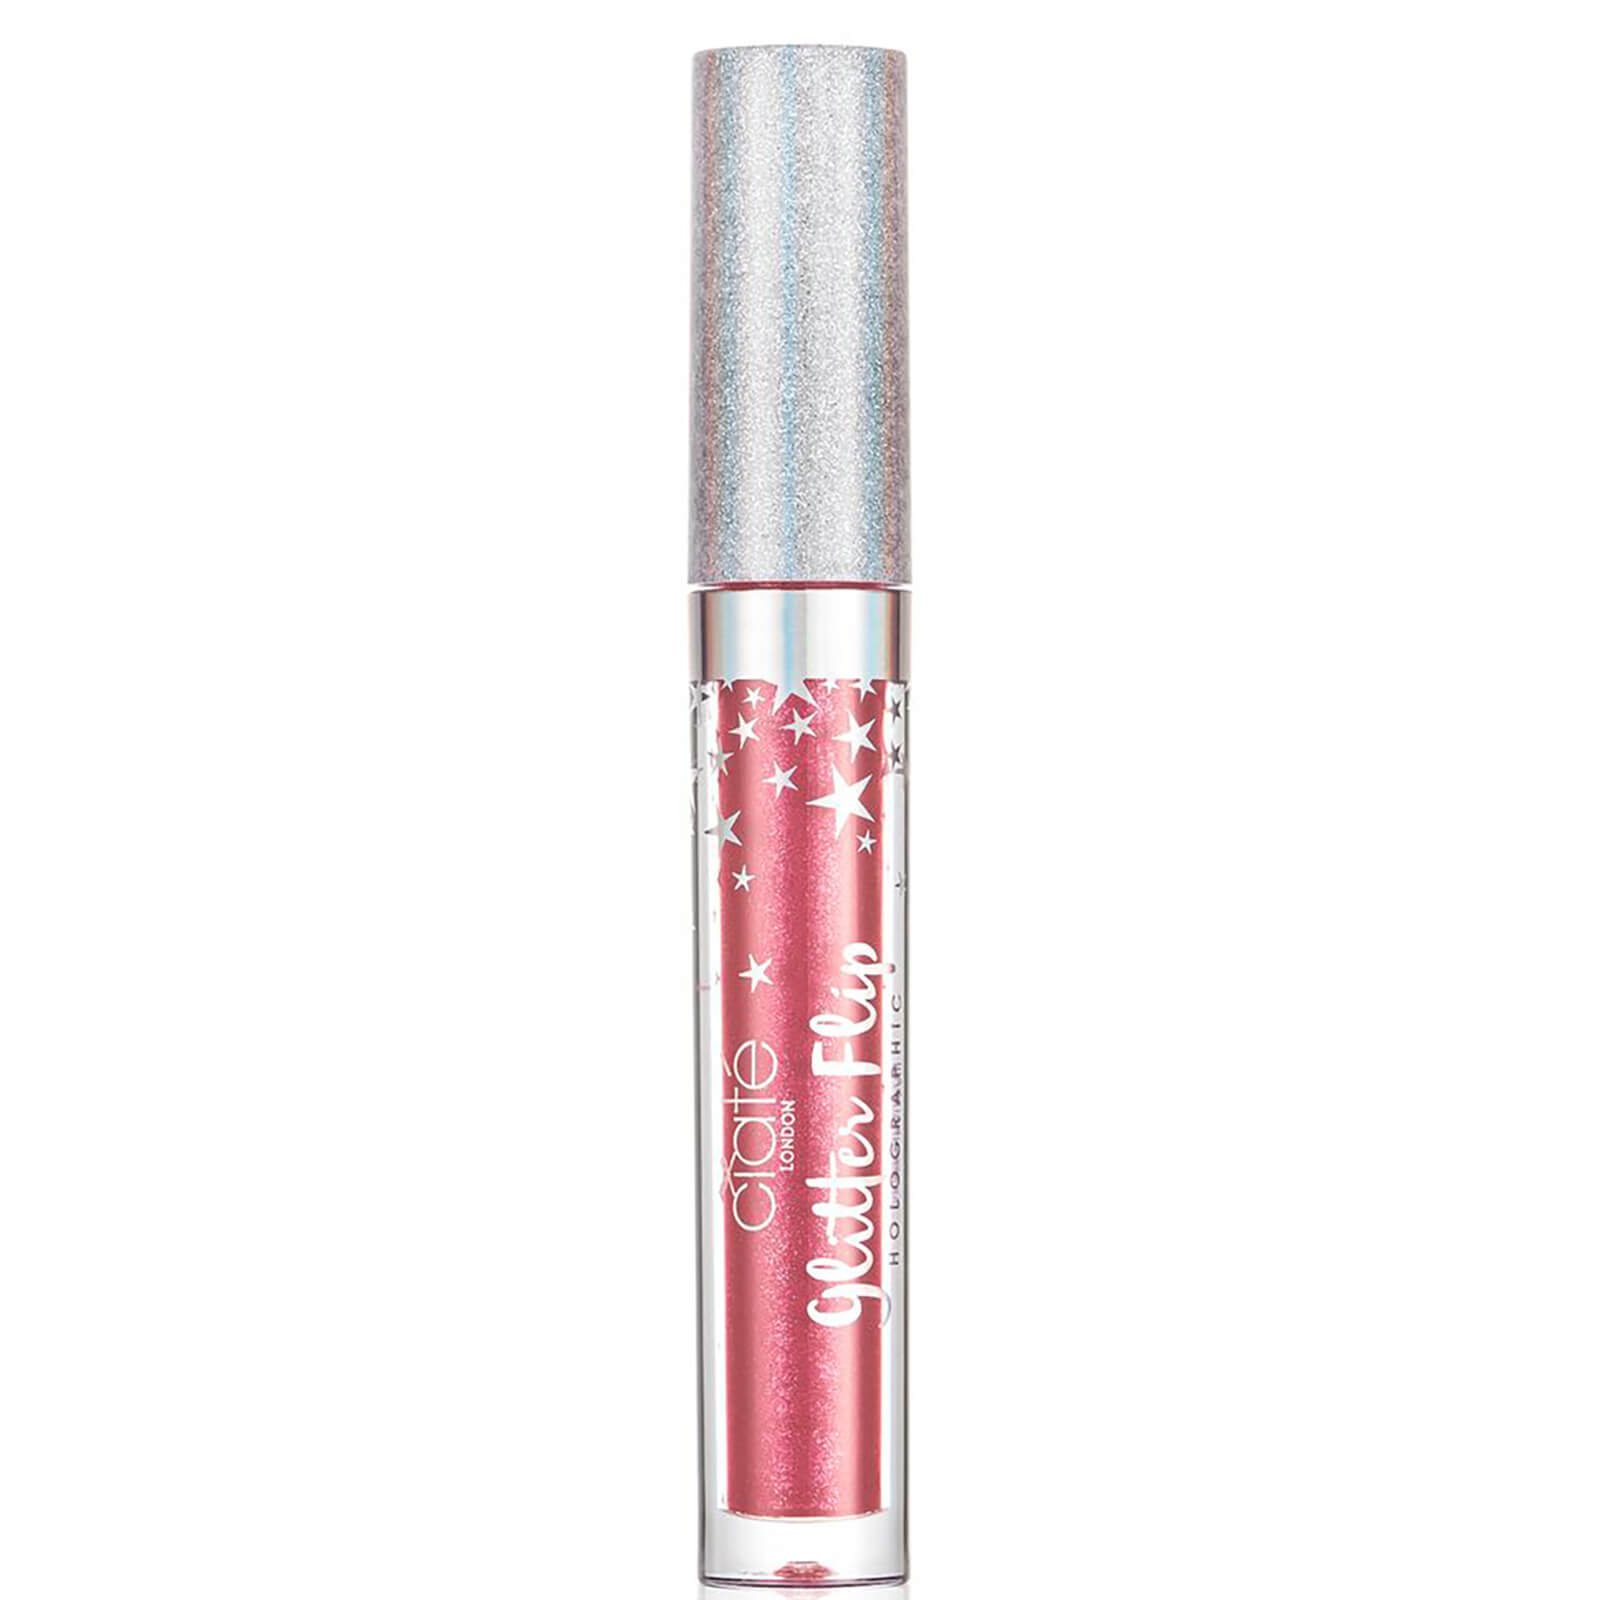 Ciaté London Glitter Flip Holographic Lipstick 3ml (Various Shades) - 2 Crush